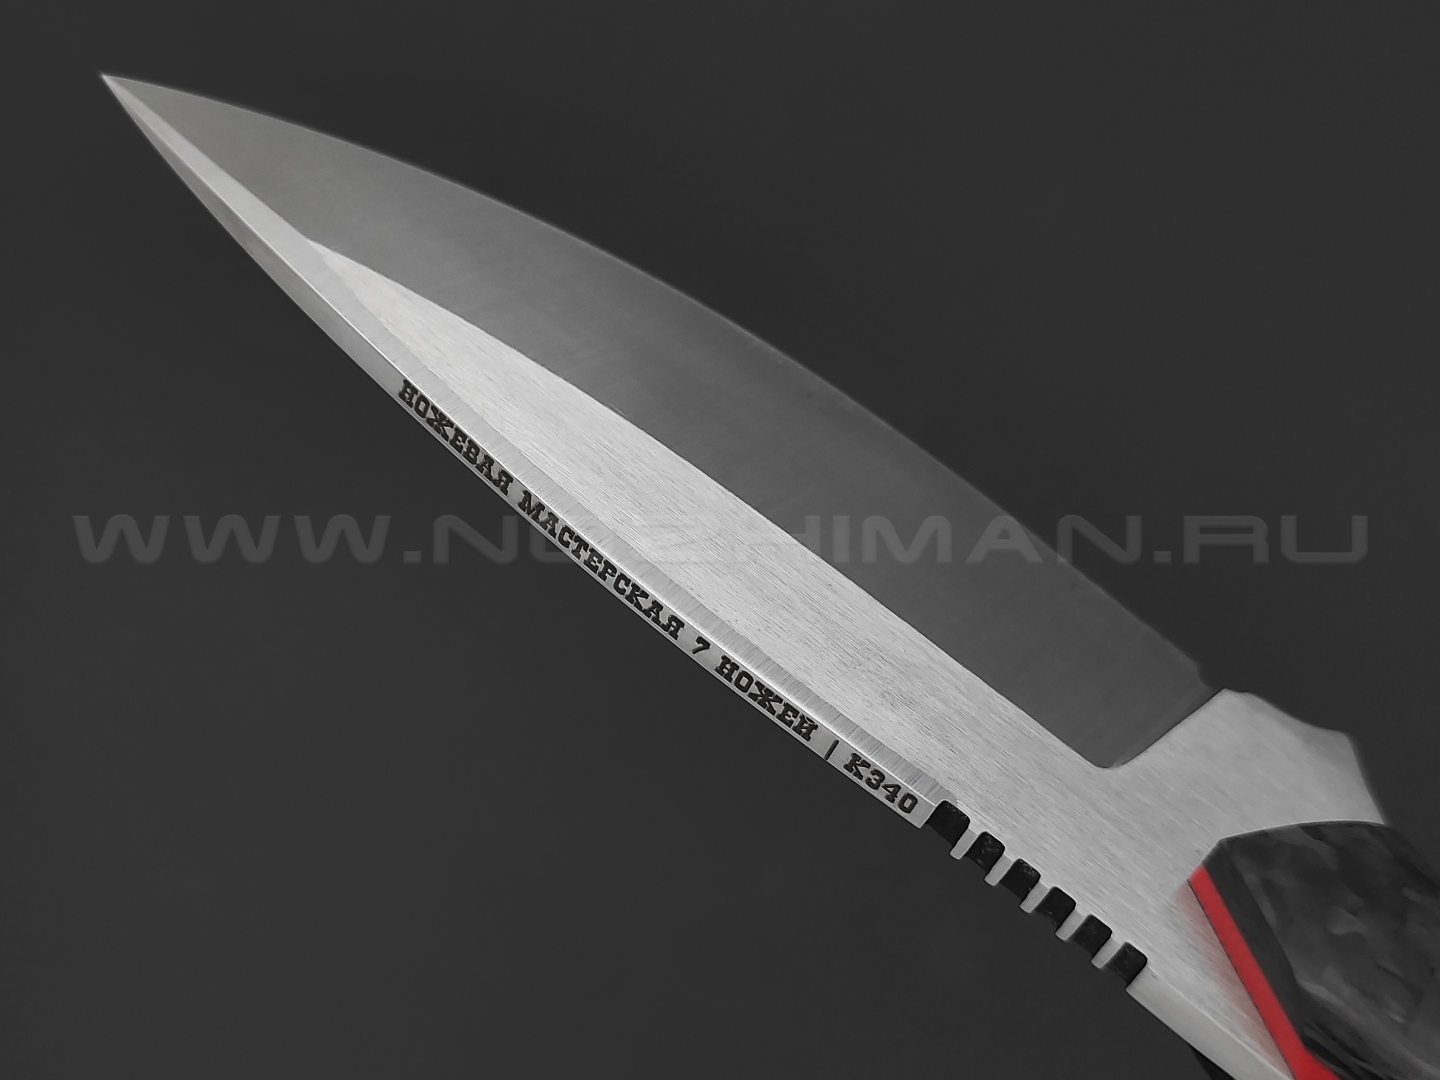 7 ножей нож Пиранья сталь K340 satin, рукоять Carbon fiber, G10 red